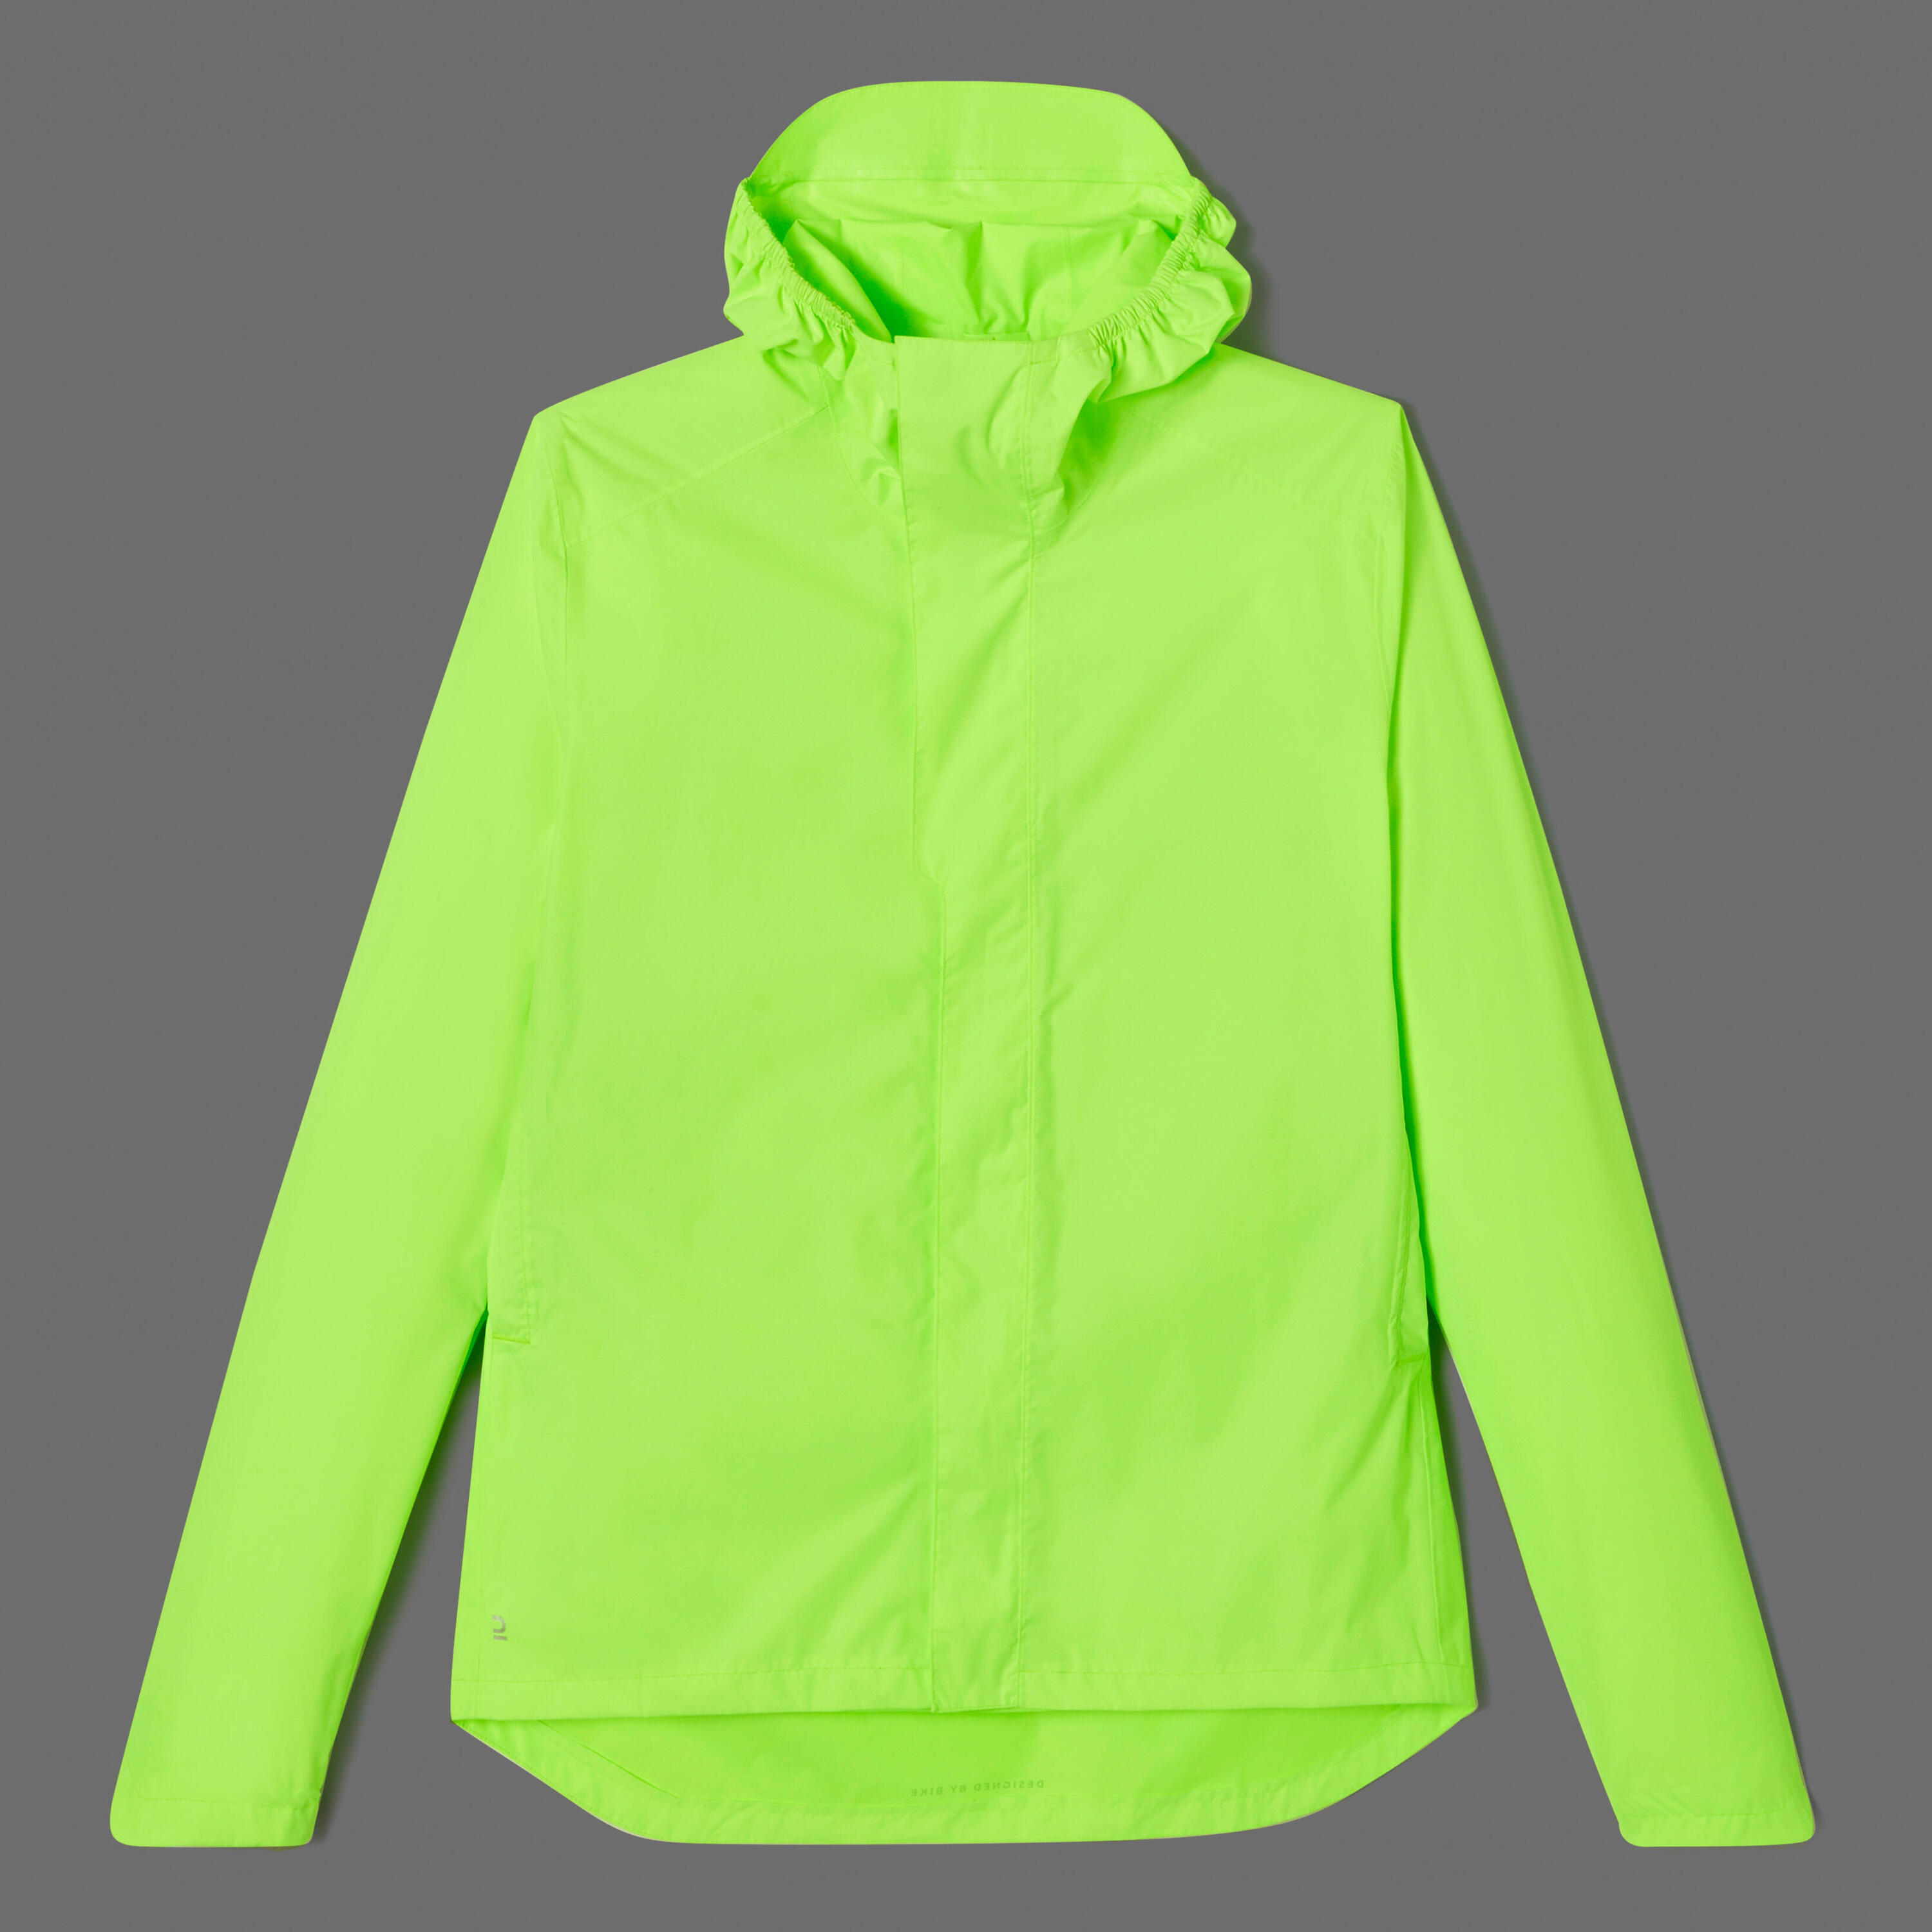 100 Men's Waterproof Urban Cycling Jacket - Neon Yellow 8/28